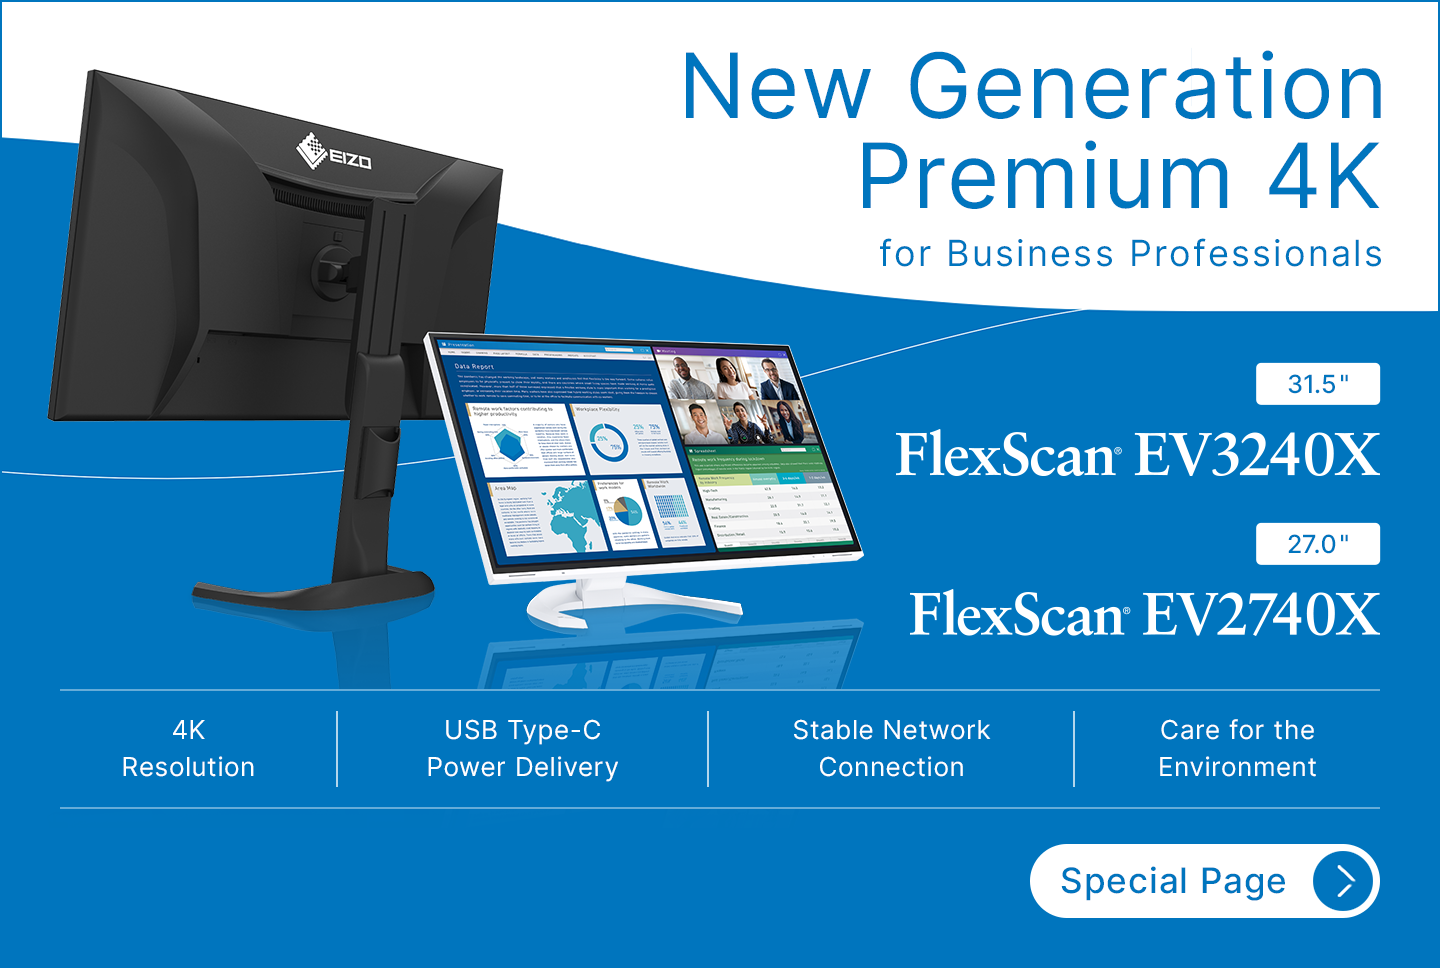 FlexScan EV3240X / EV2740X special page